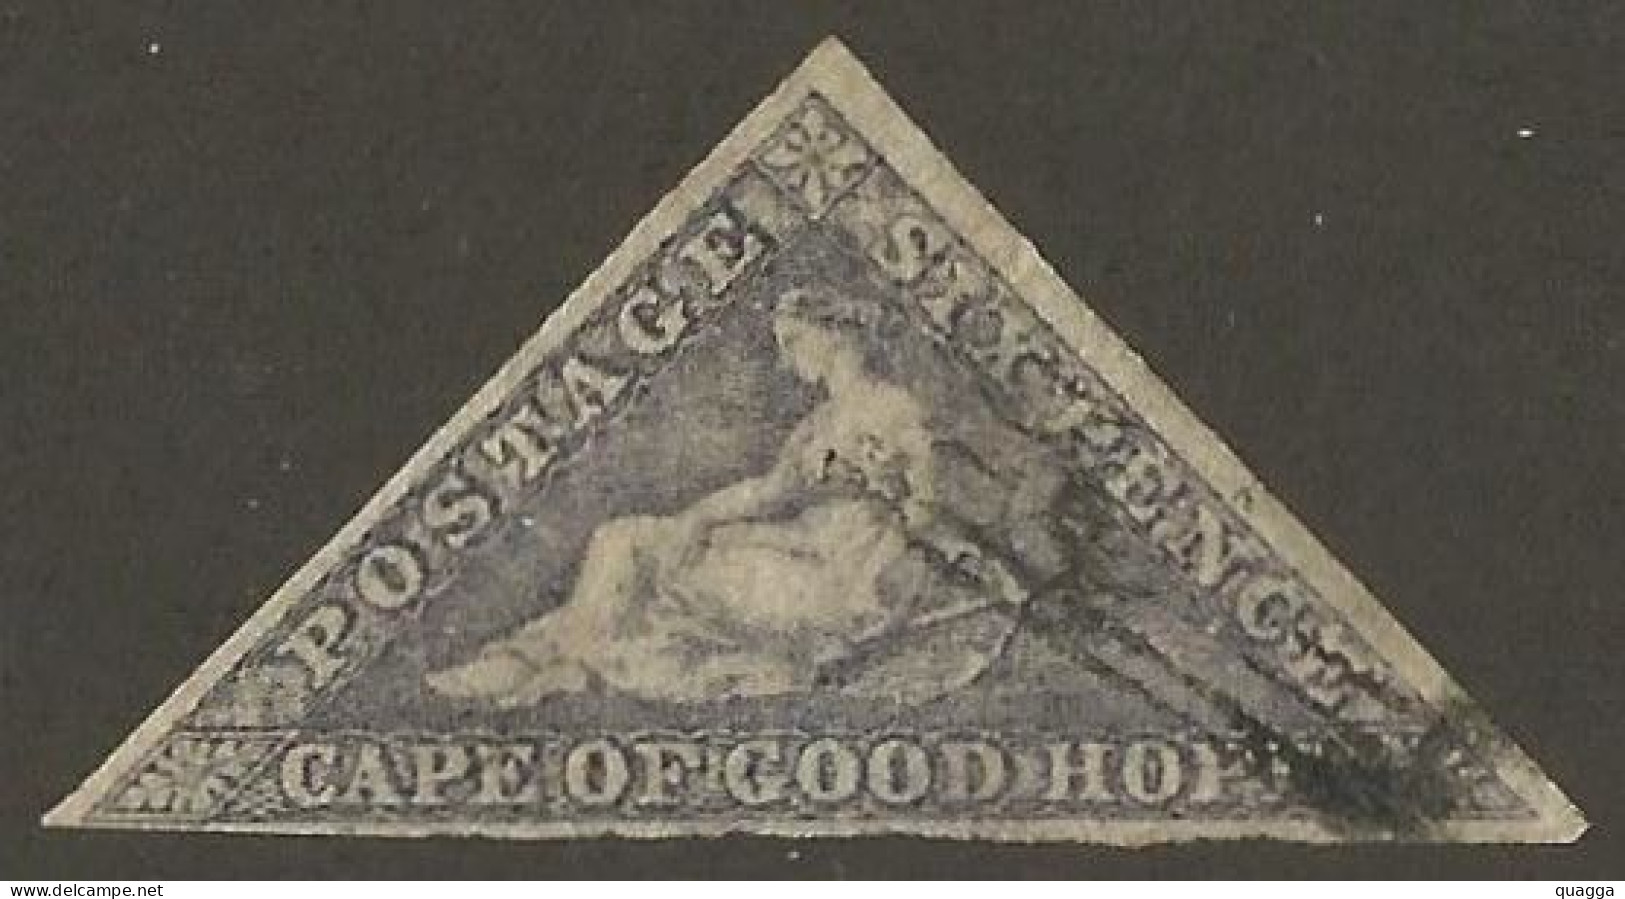 Cape Of Good Hope 1855. 6d Slate Purple (blued Paper), SG 7d, SACC 7d, - Cape Of Good Hope (1853-1904)